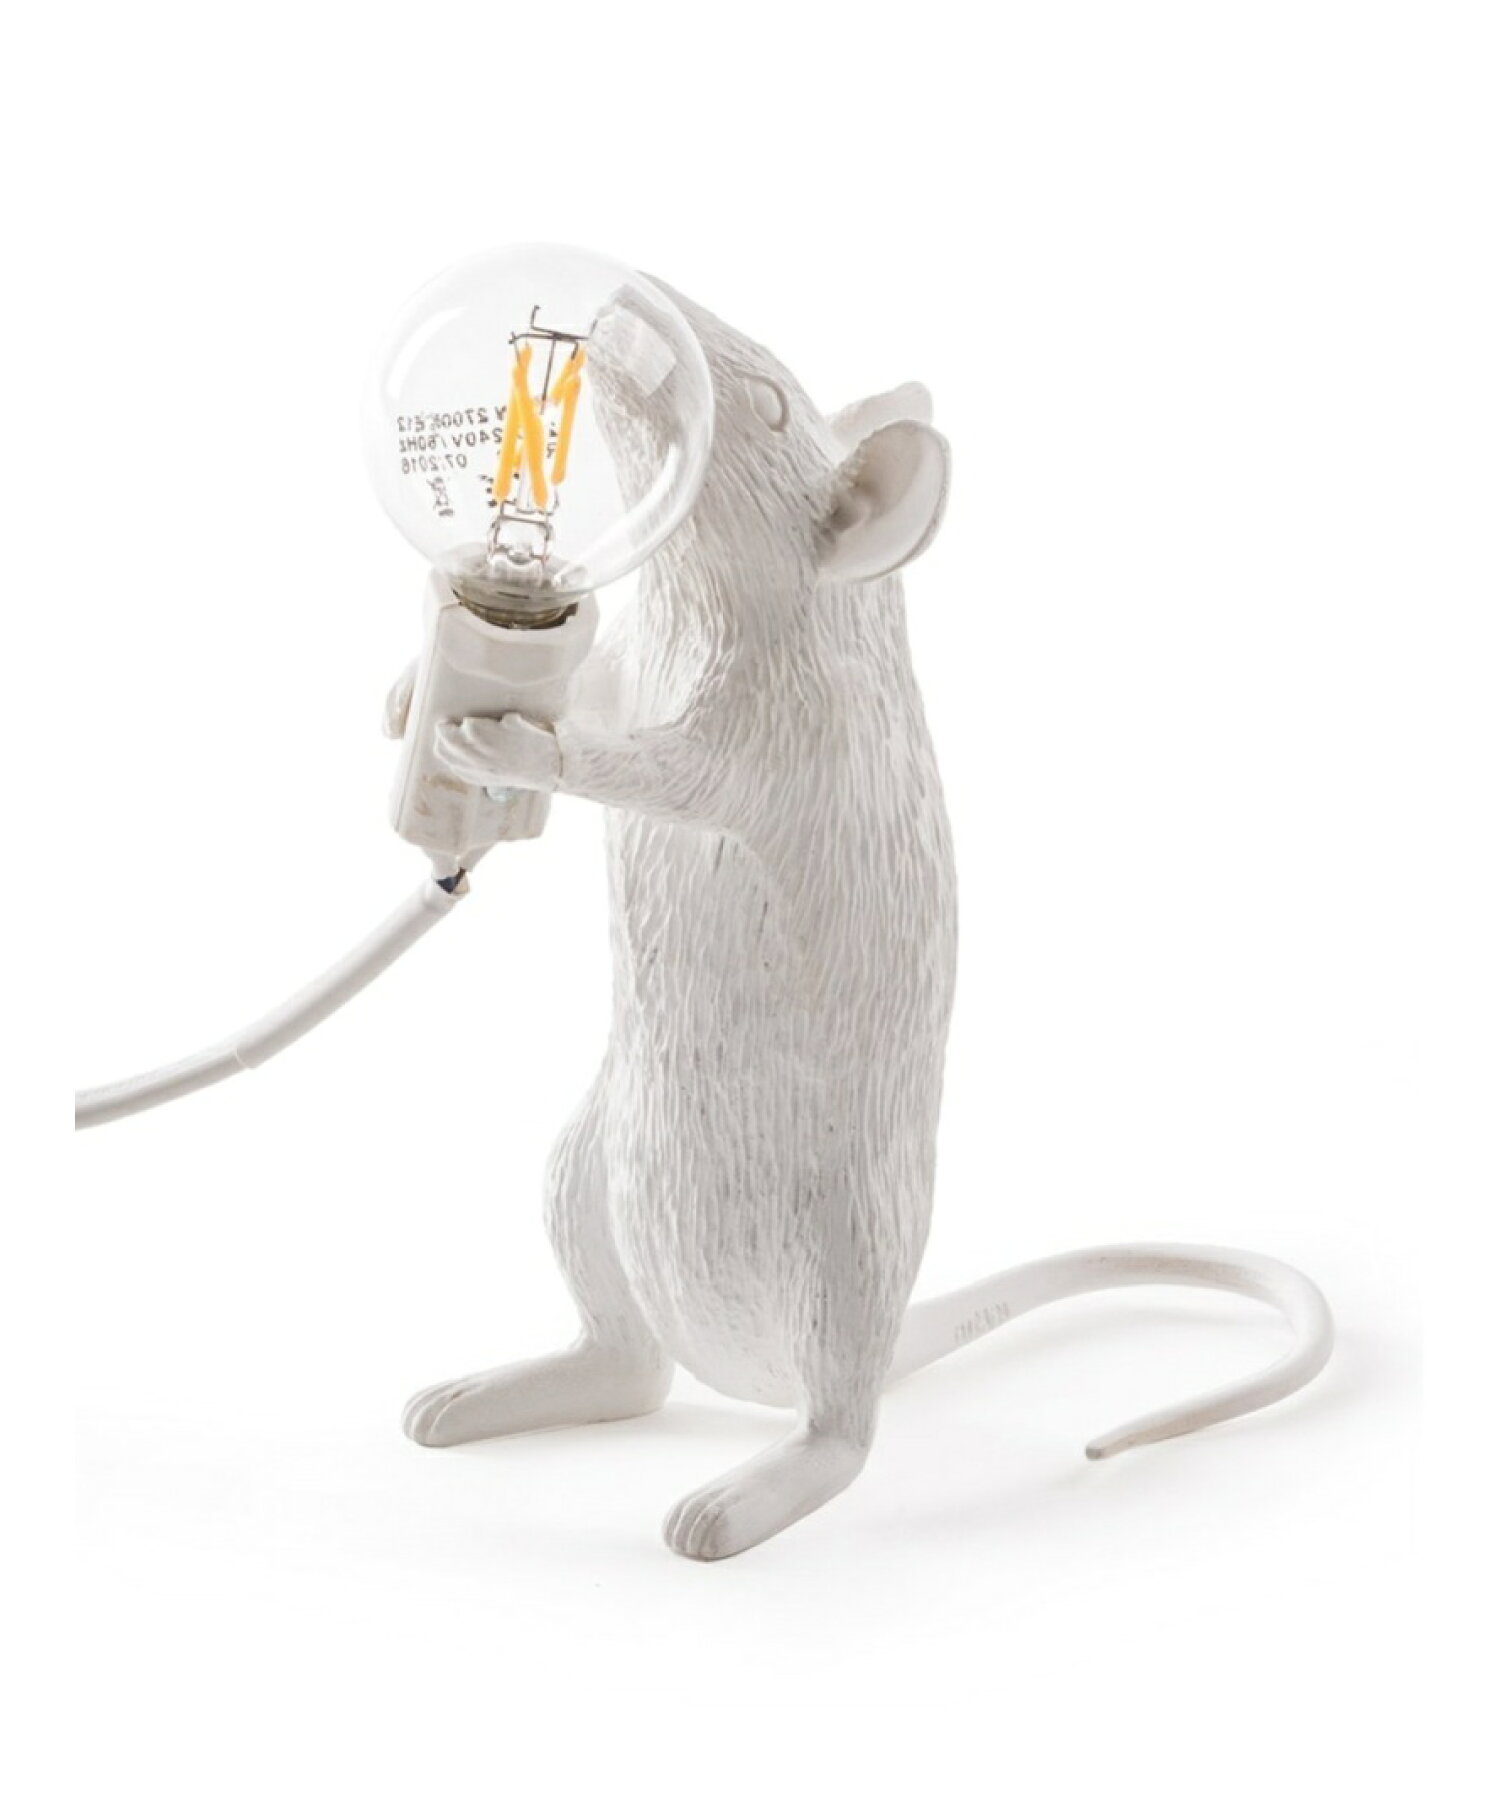 SELETTI/マウスランプ #1 スタンディング (USB)